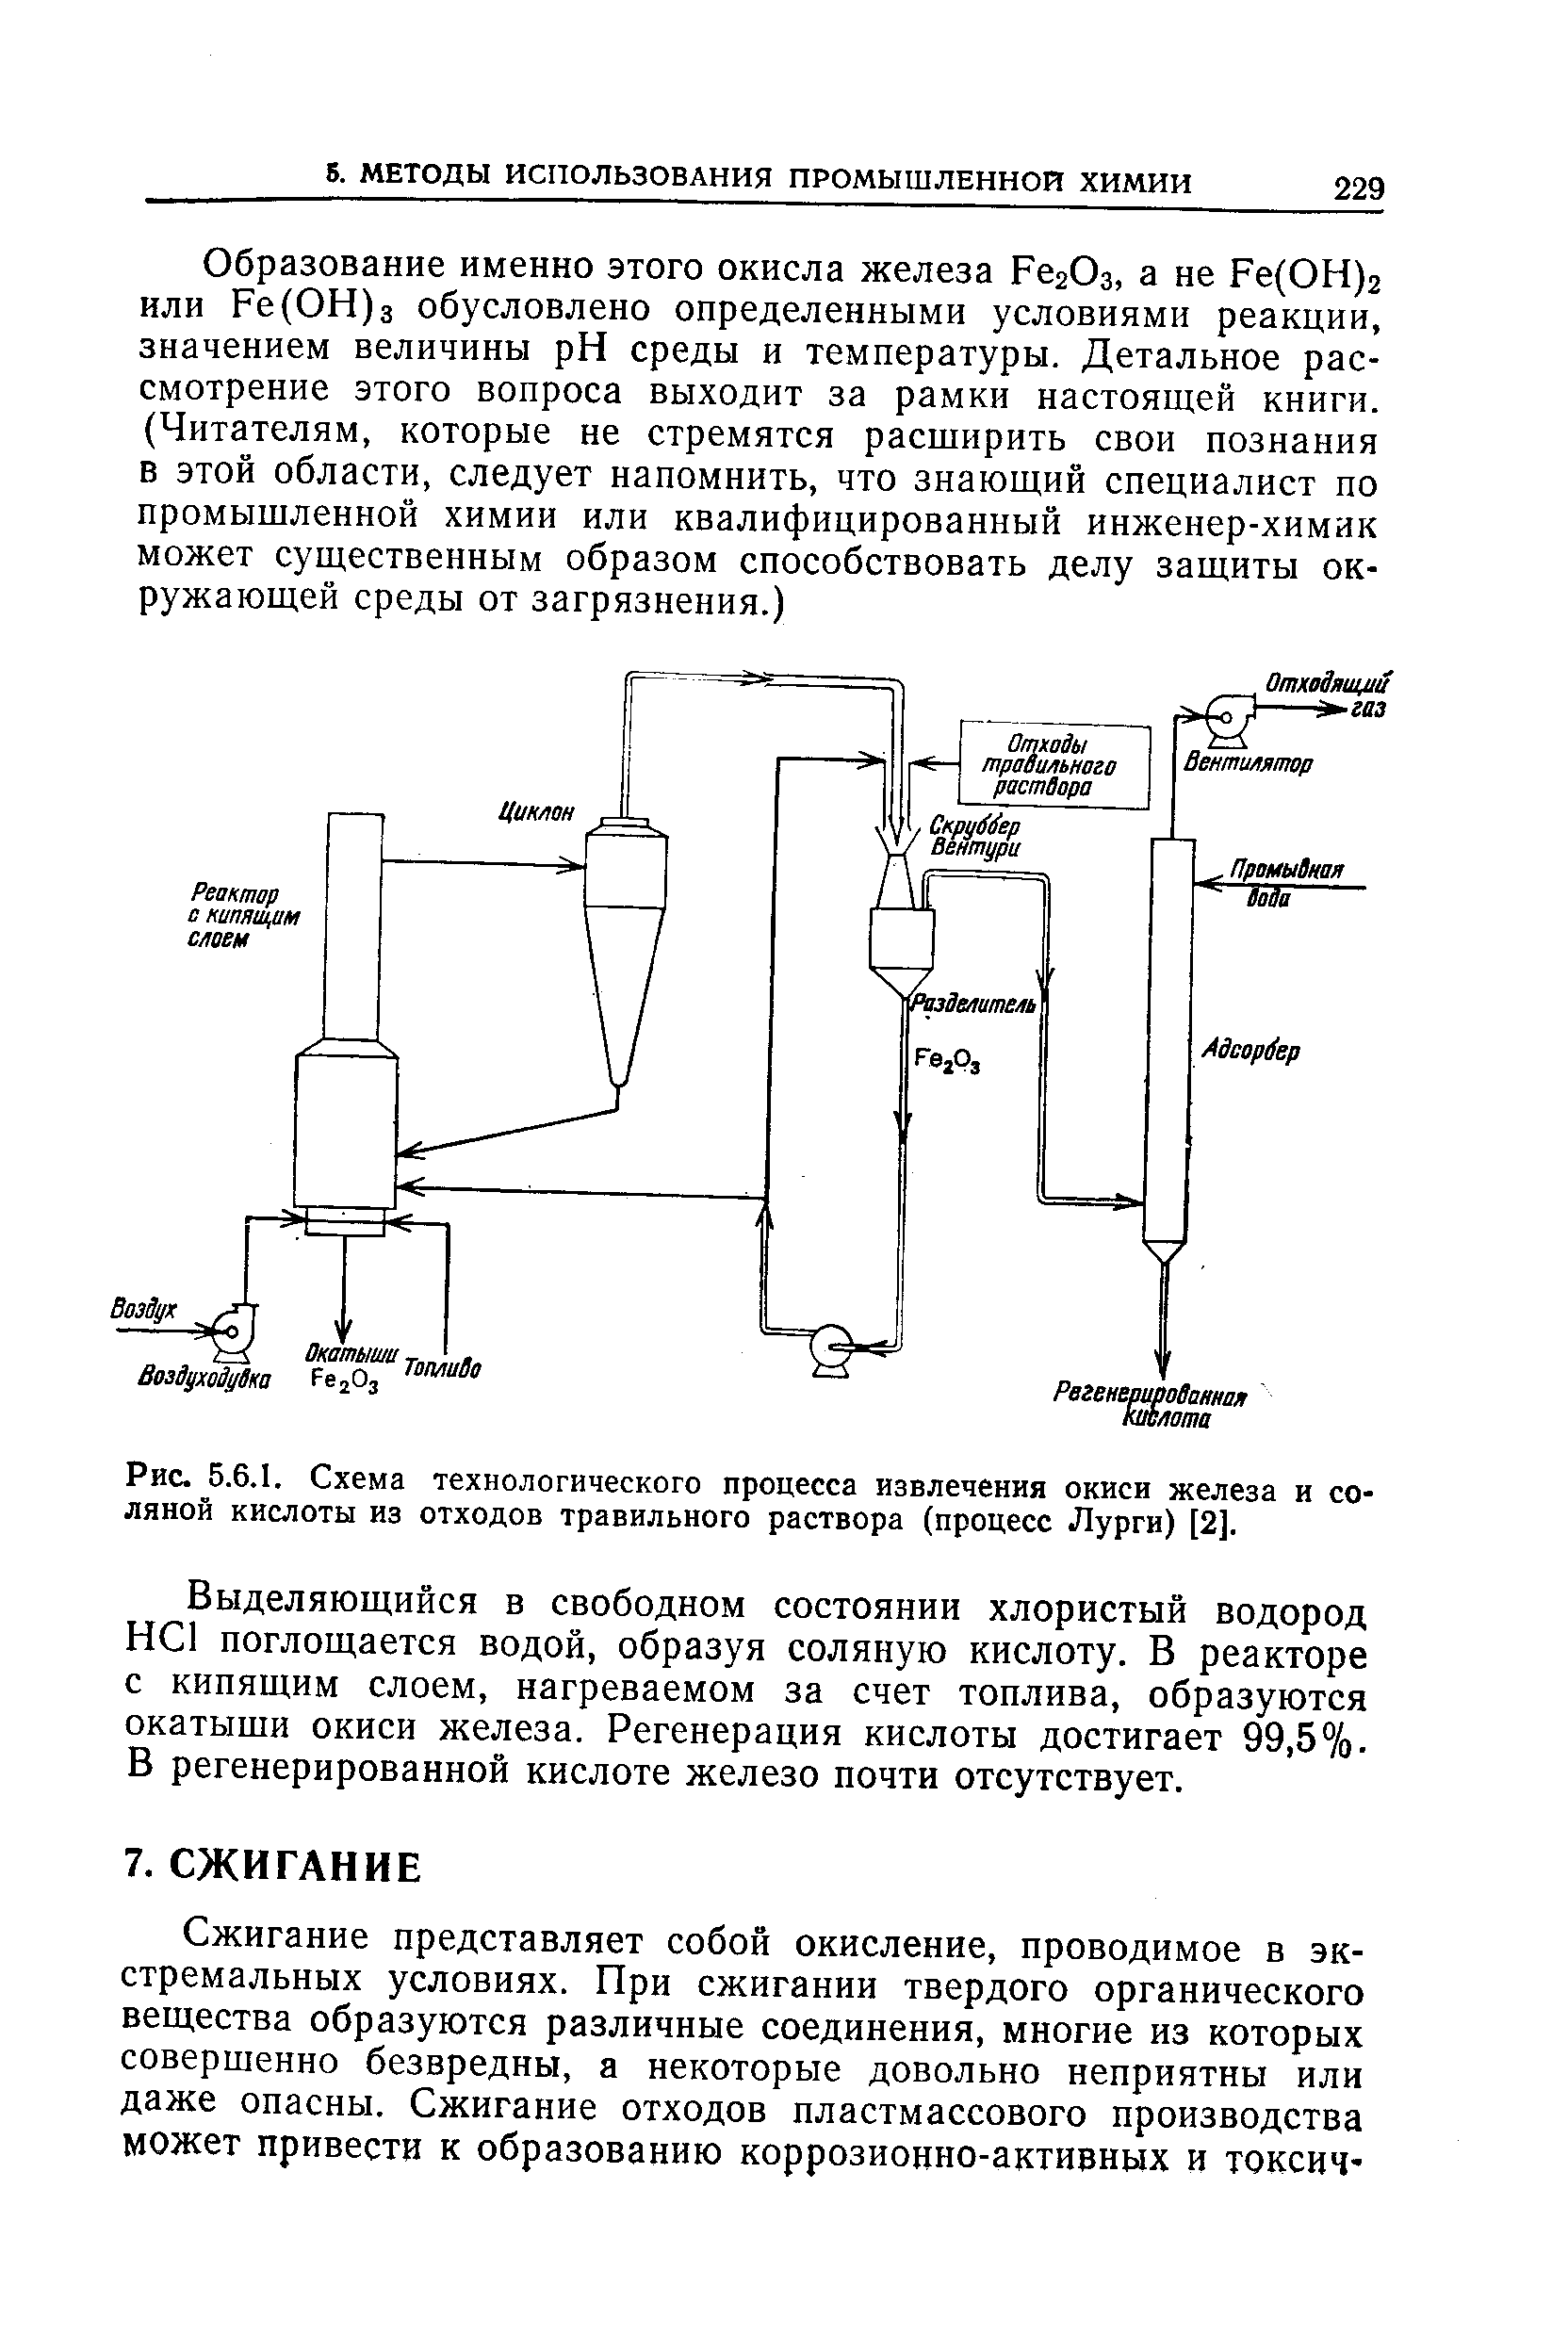 Схема технологического процесса на шиномонтажном участке